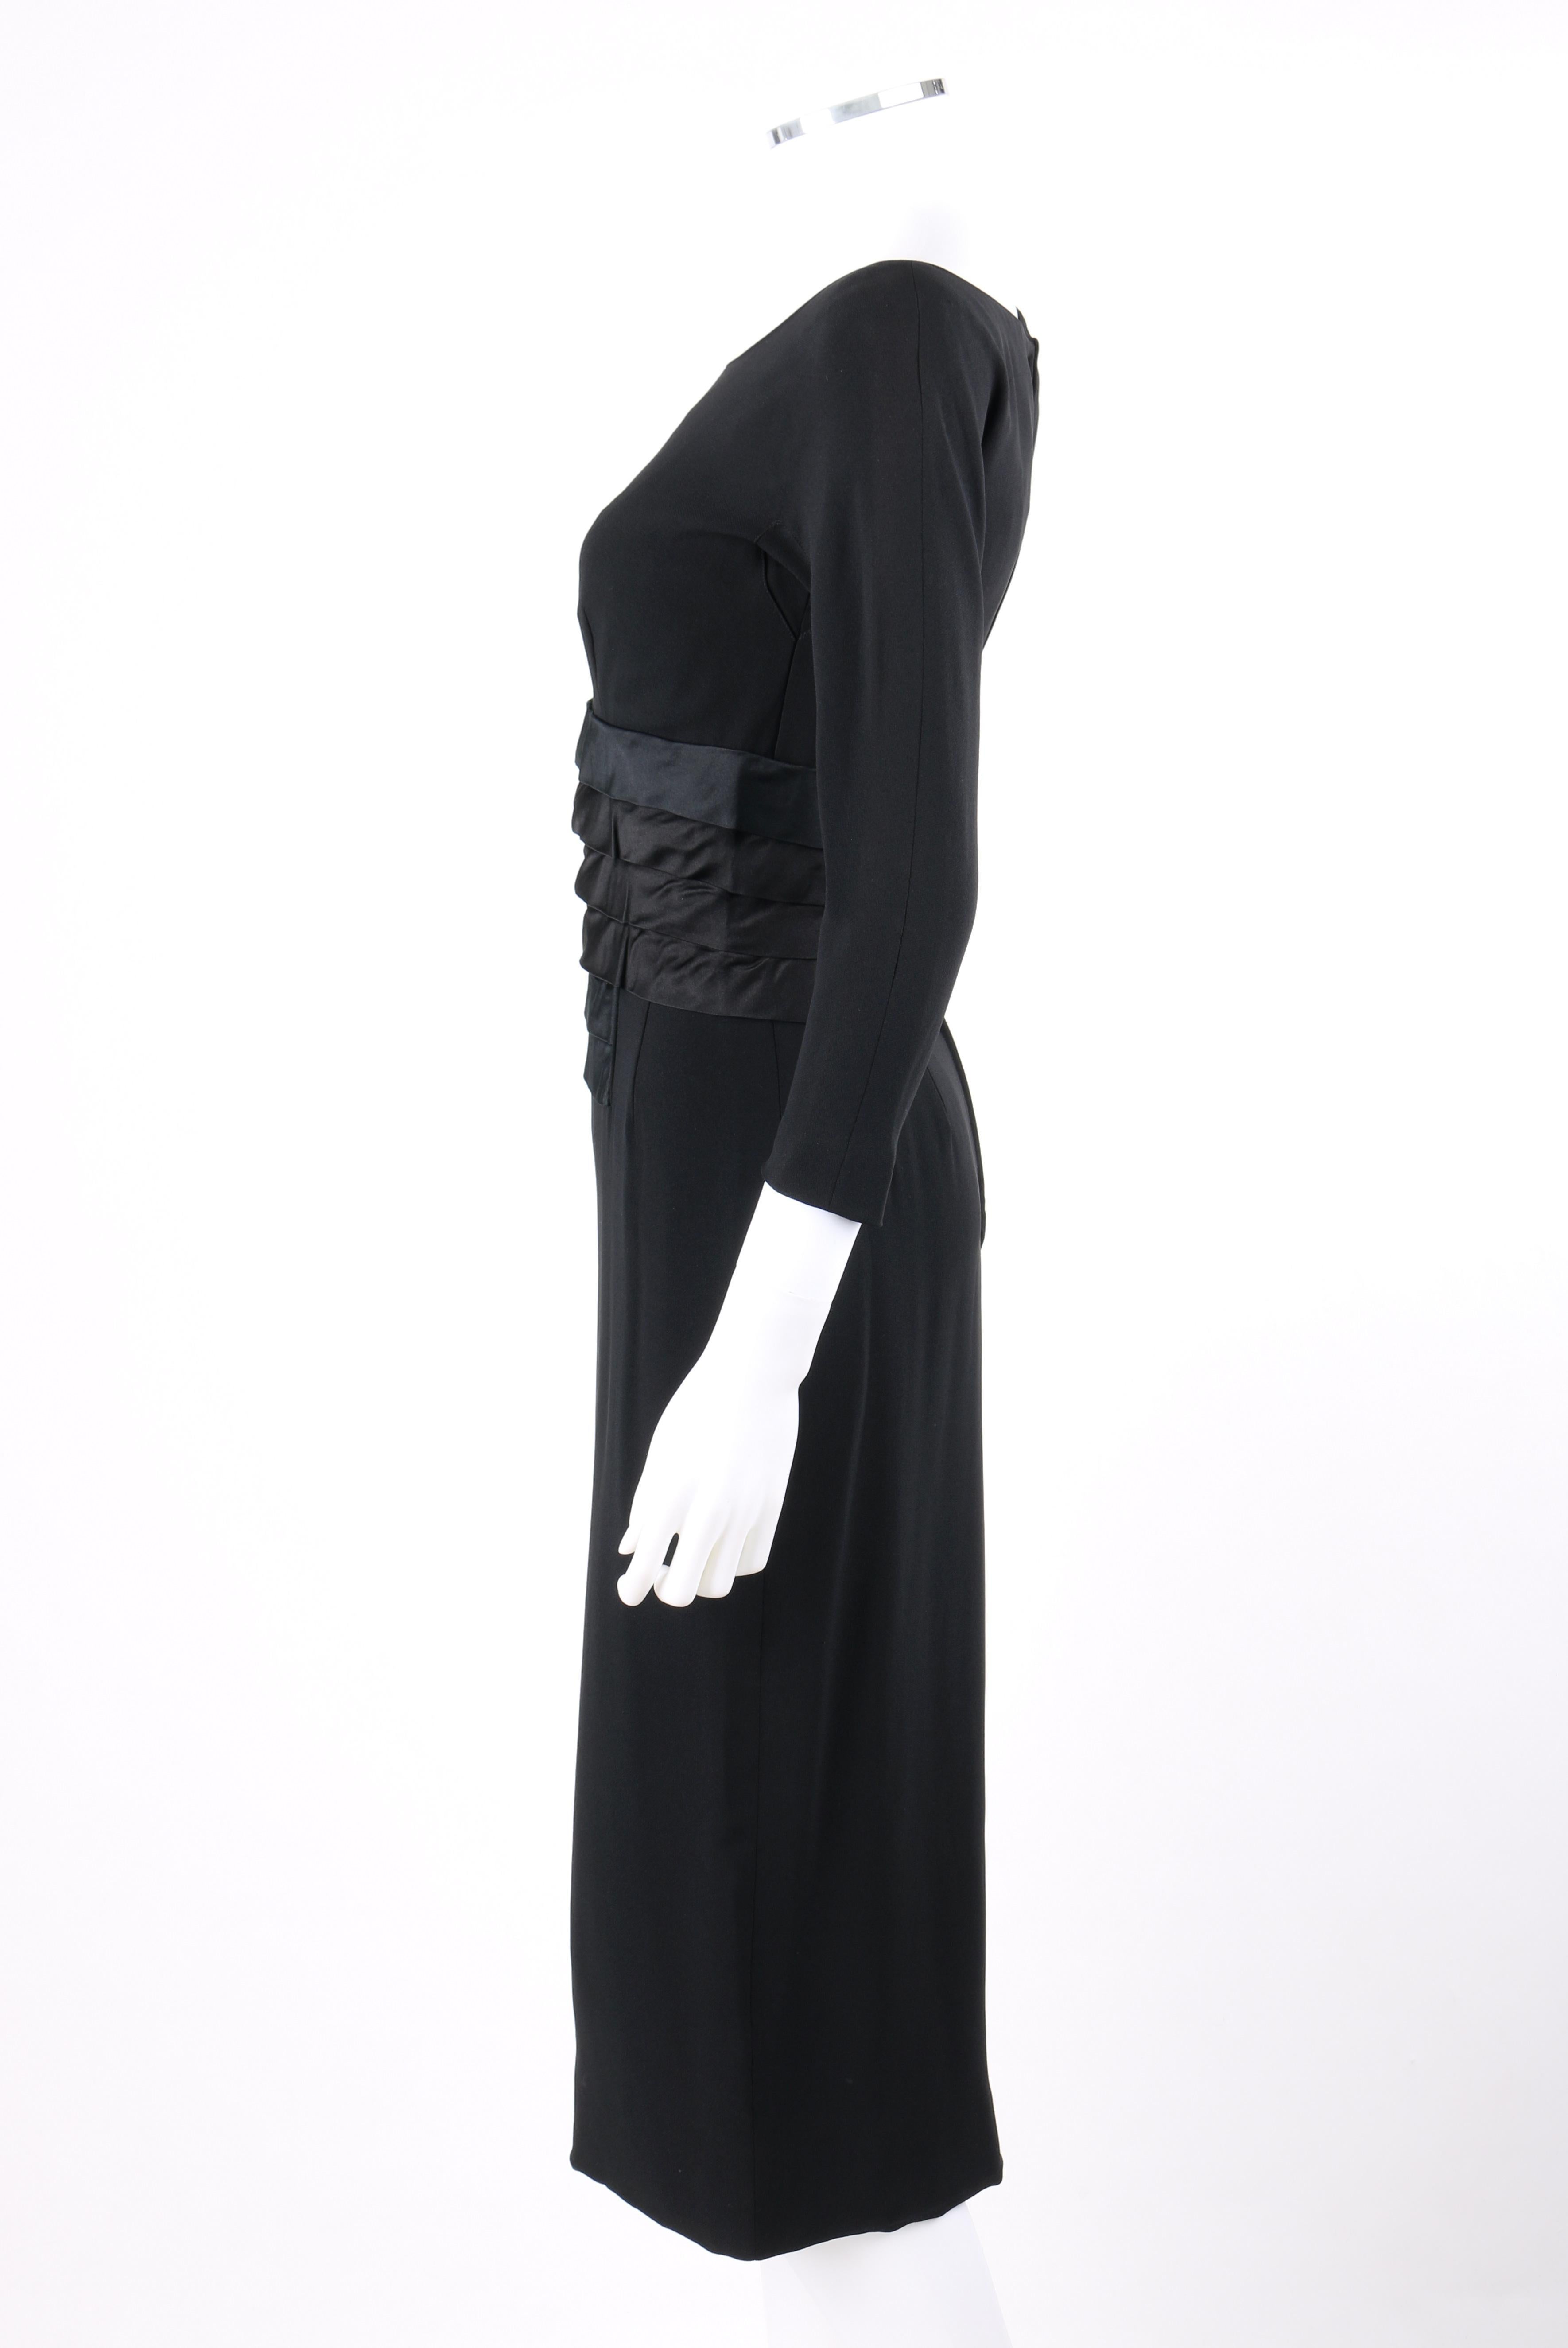 NAT KAPLAN c.1960s Black Silk Satin Tiered Pleat Waist Boat Neck Sheath Dress 1